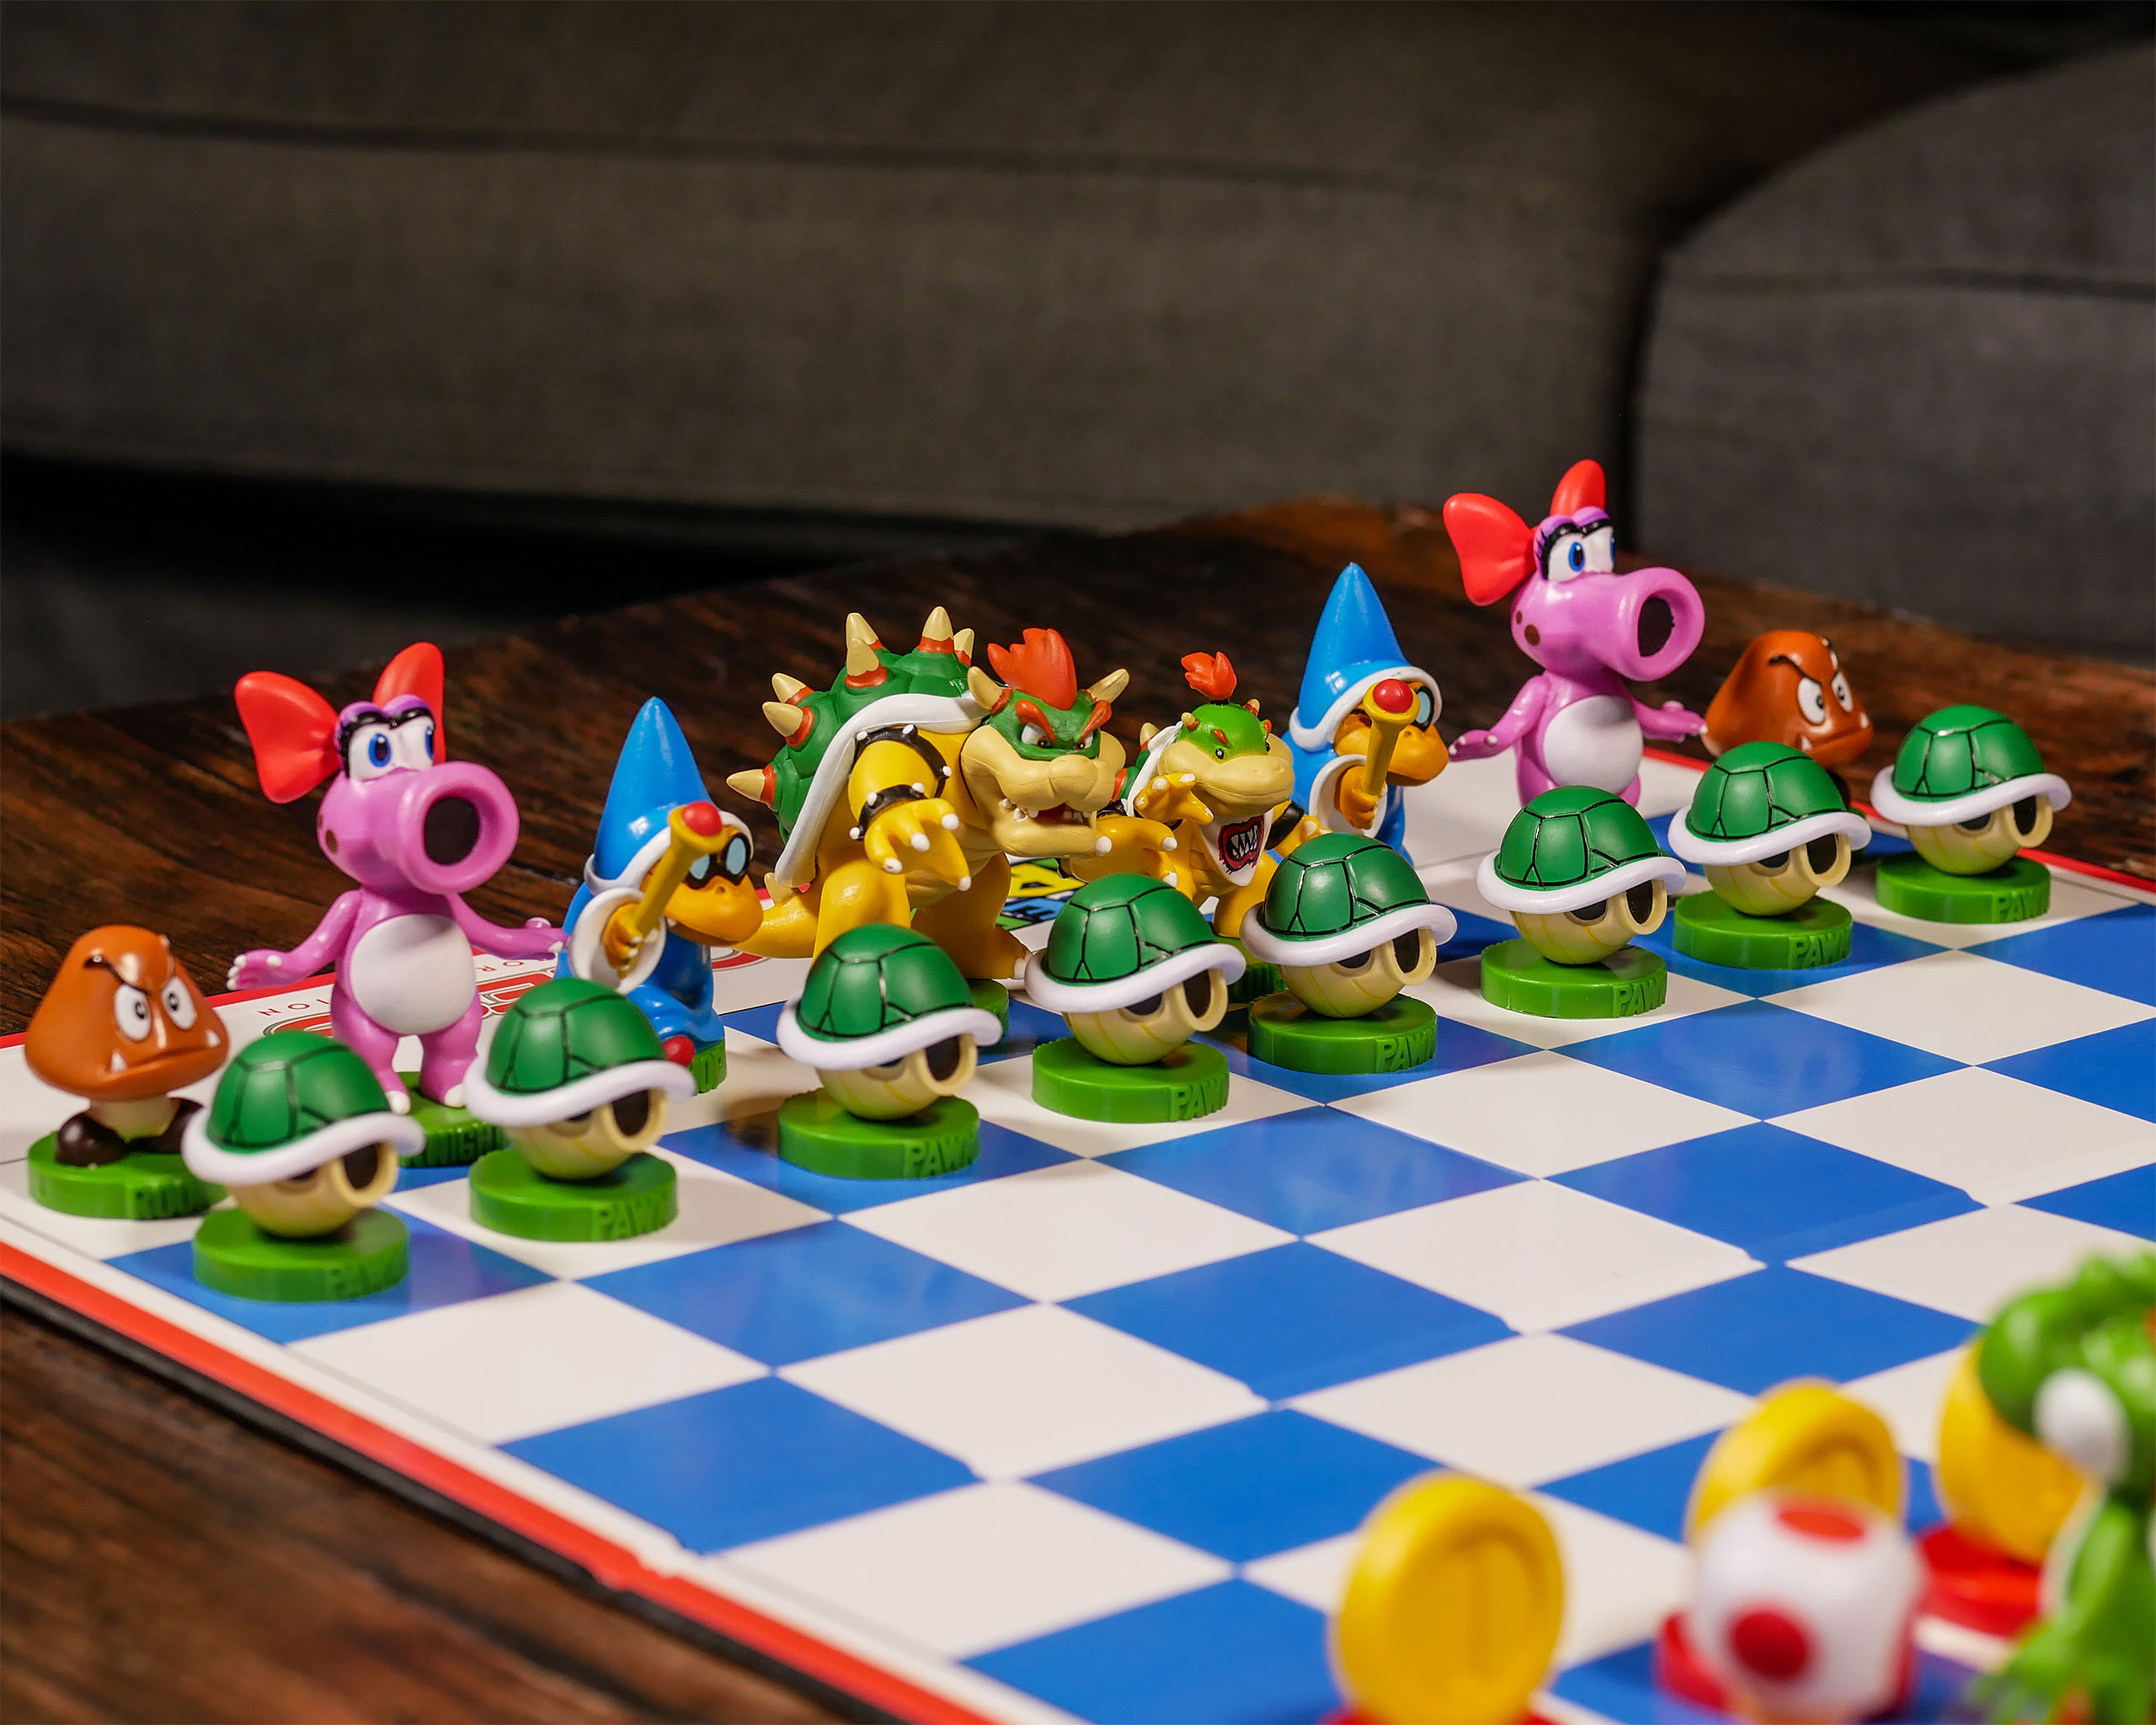 Super Mario - Collector's Edition Chess Set